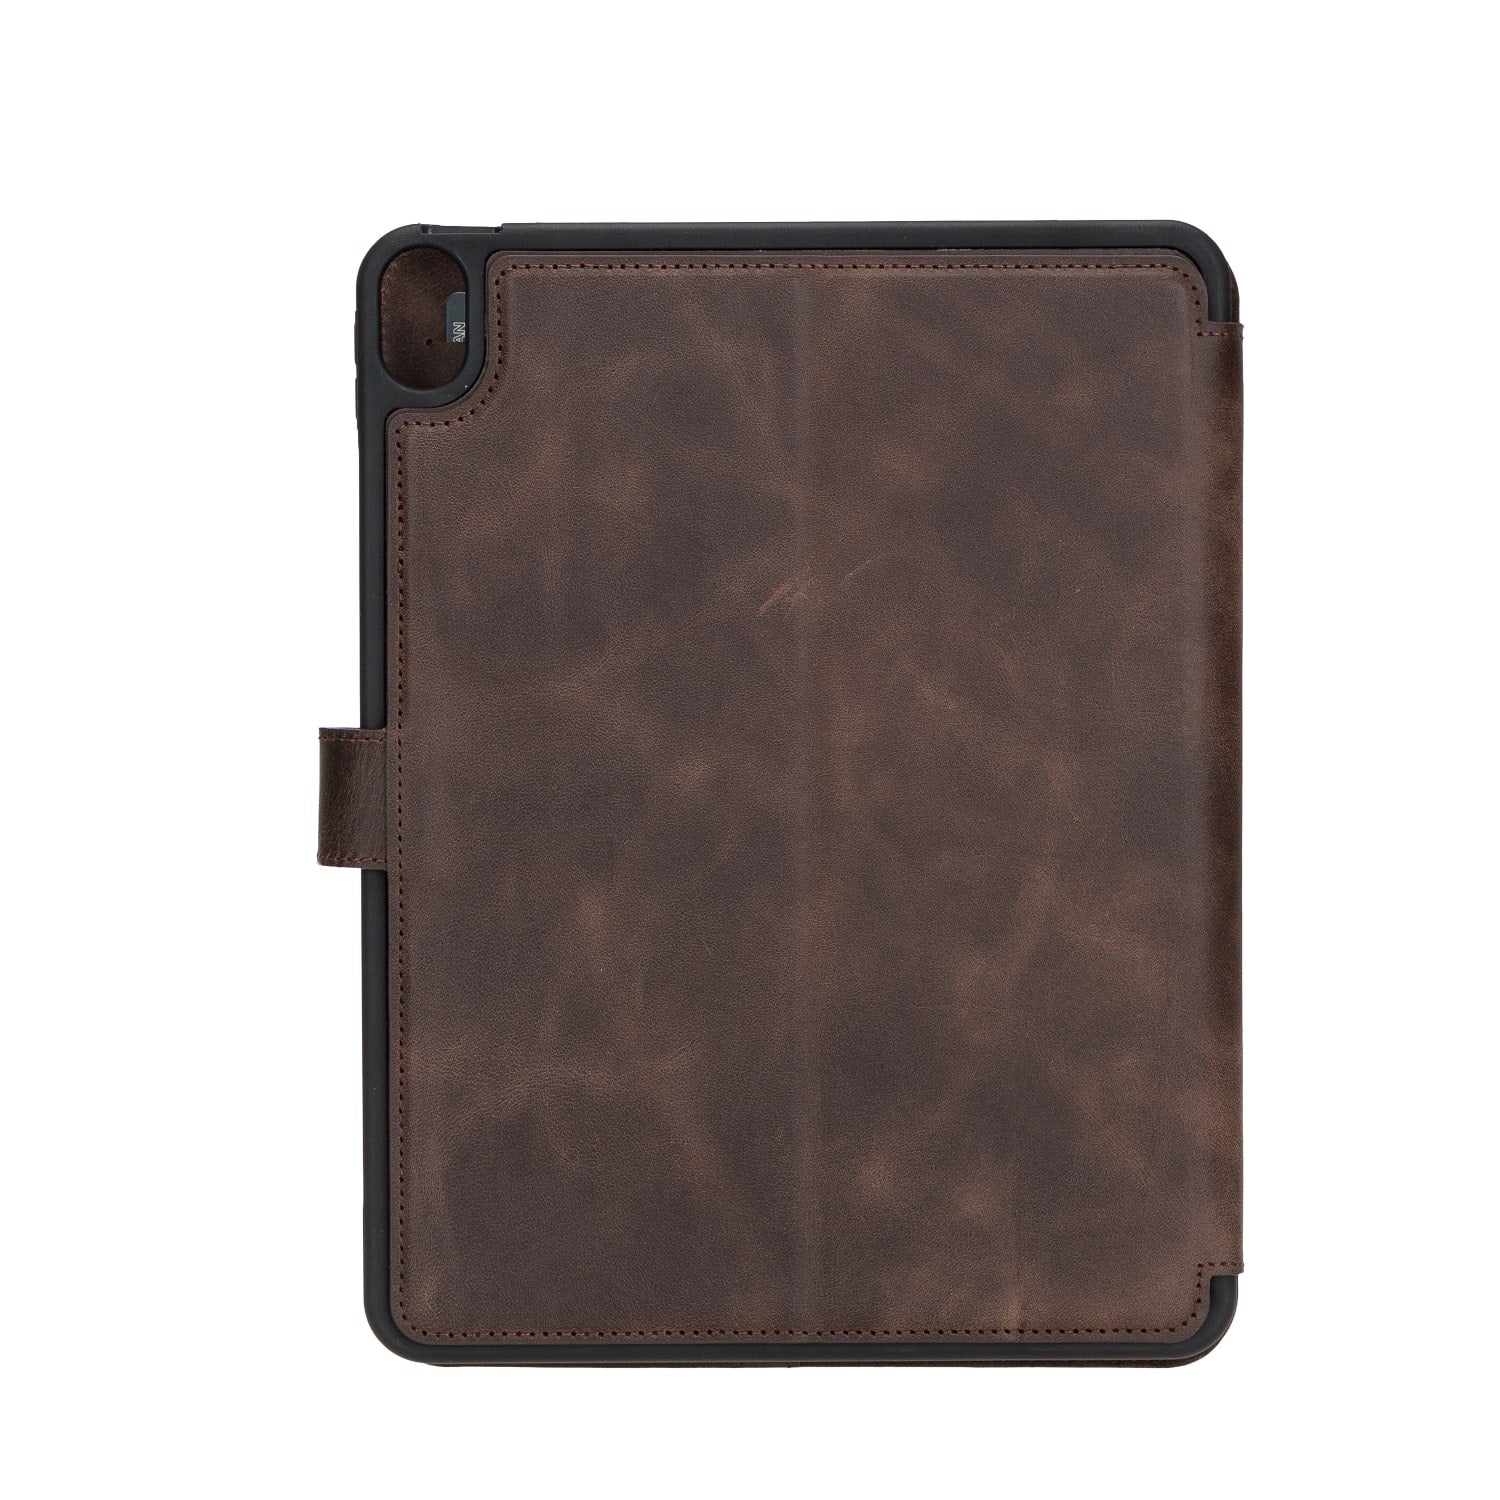 Tan Brown Leather iPad Air 10.9 Inc Smart Folio Case with Apple Pen Holder - Bomonti - 4